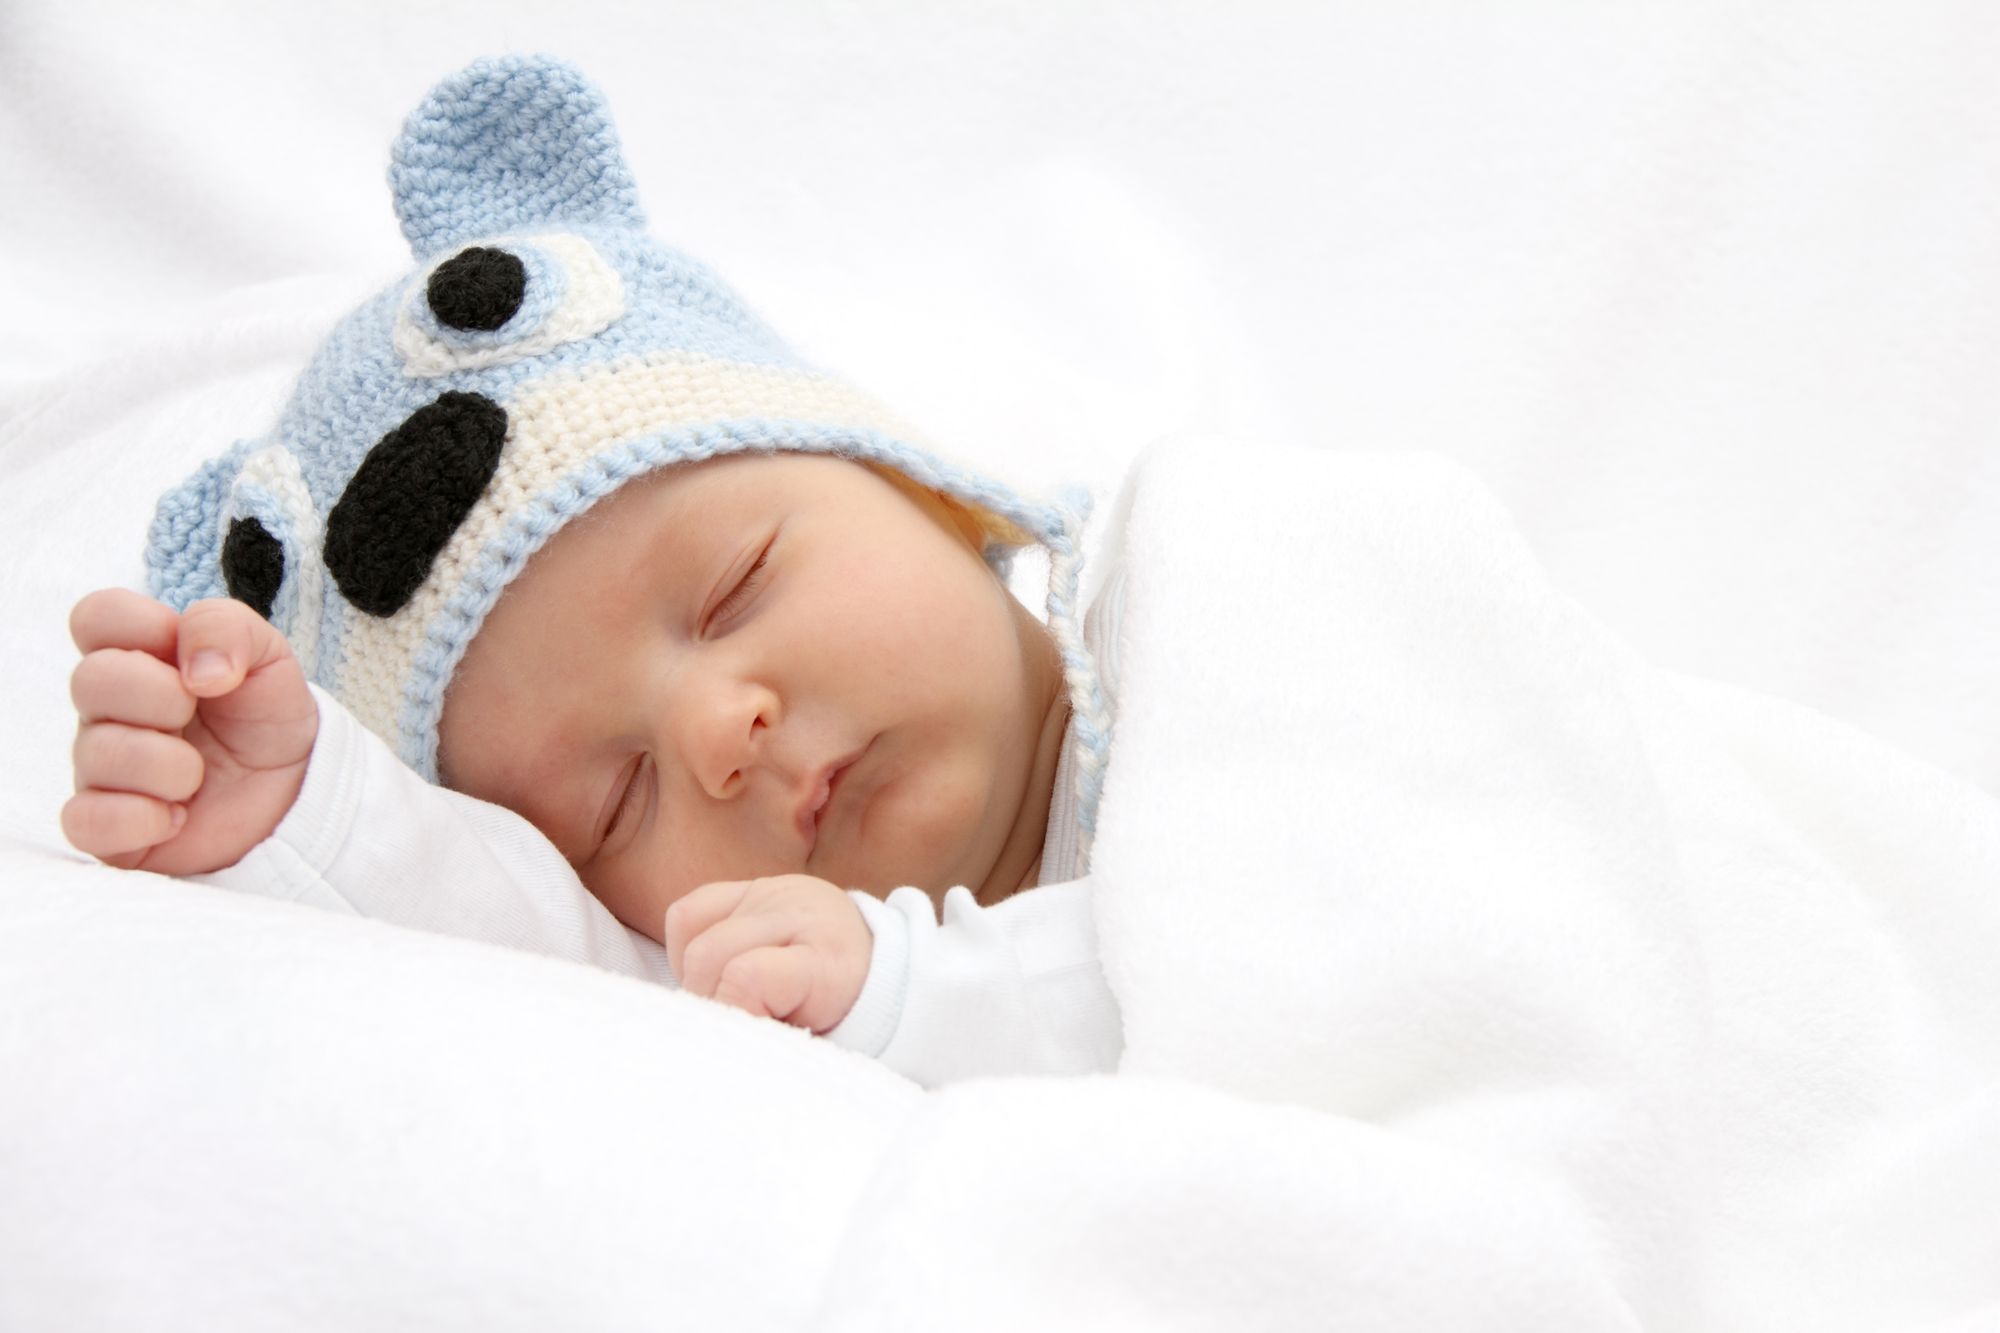 5 Tips to Help Your Baby Sleep Better